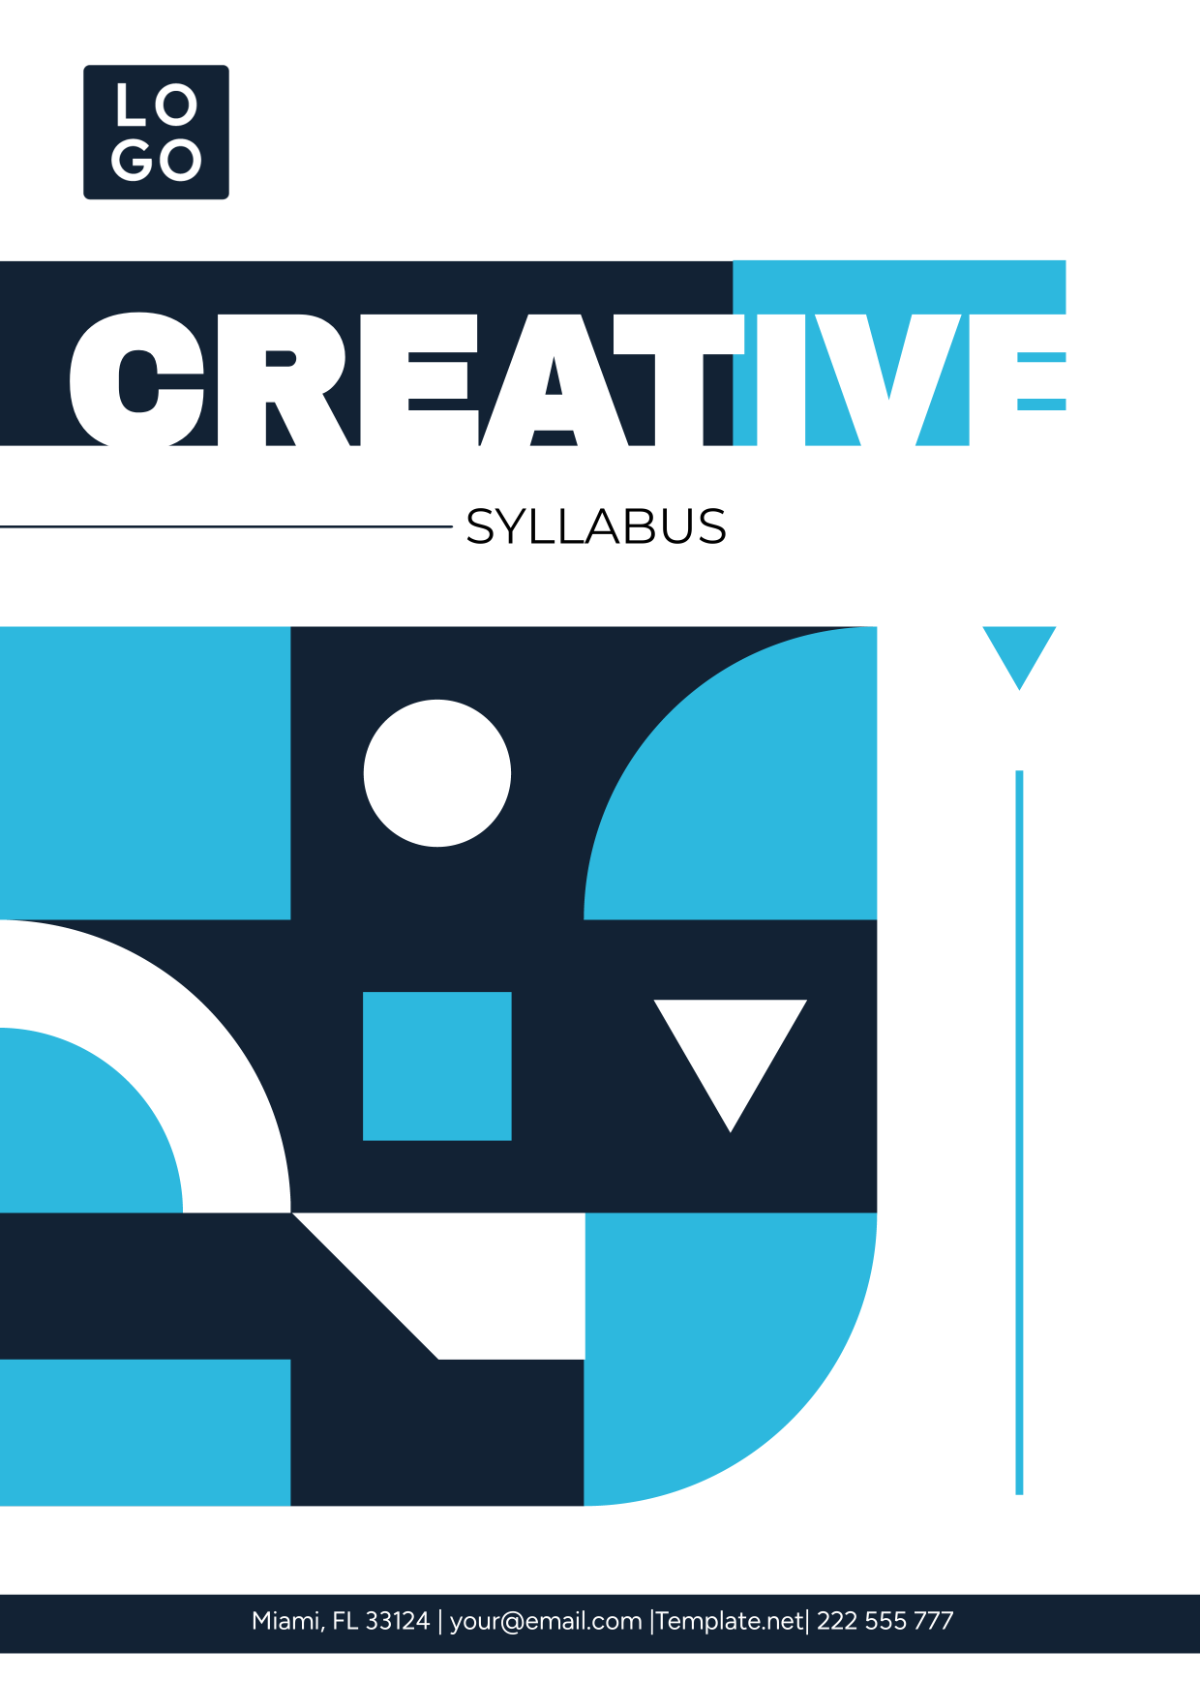 Creative Syllabus Template